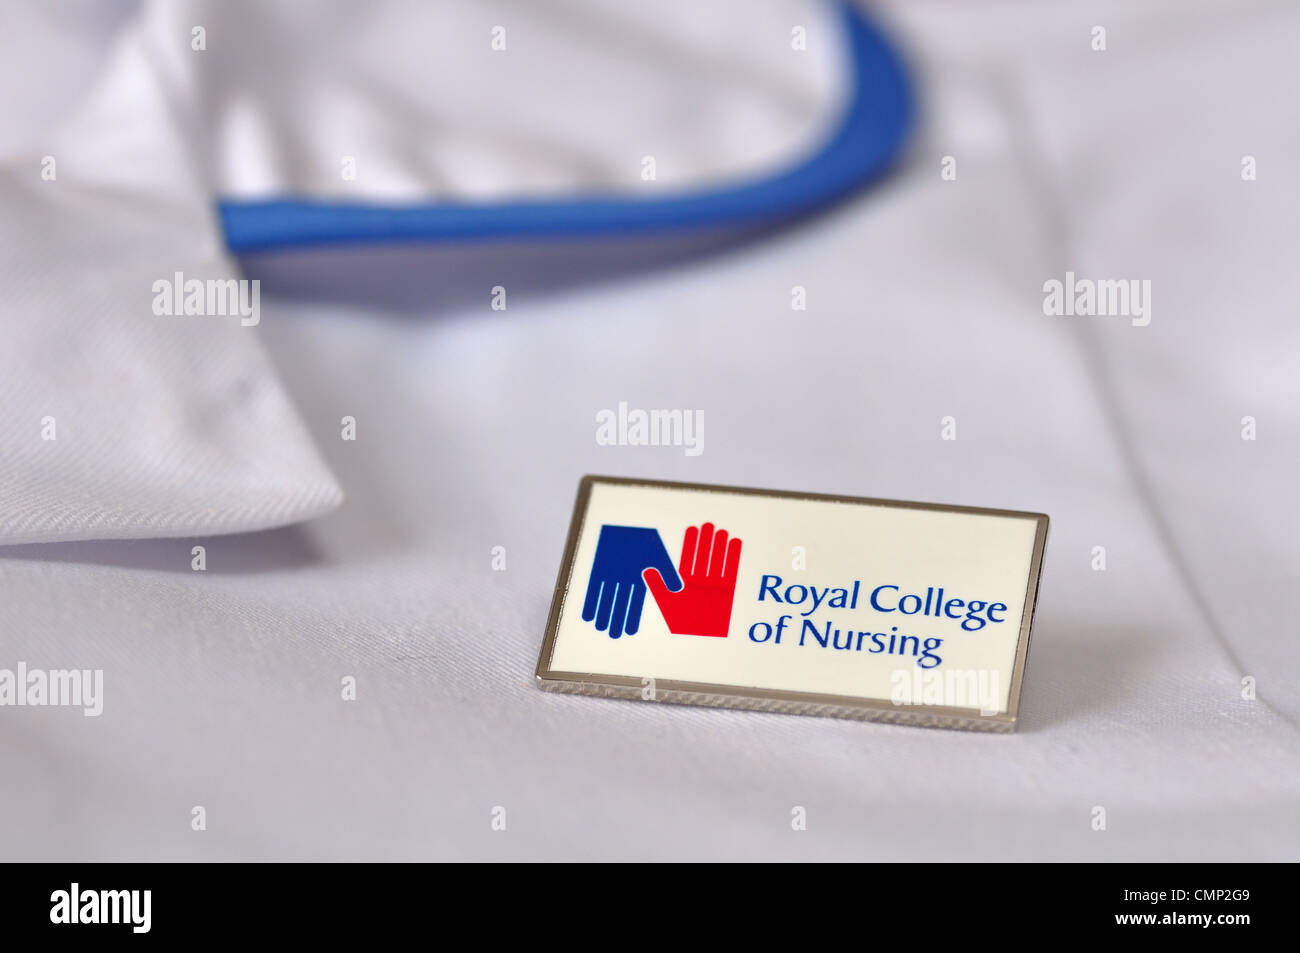 Nurses uniform showing Royal College of Nursing badge Stock Photo